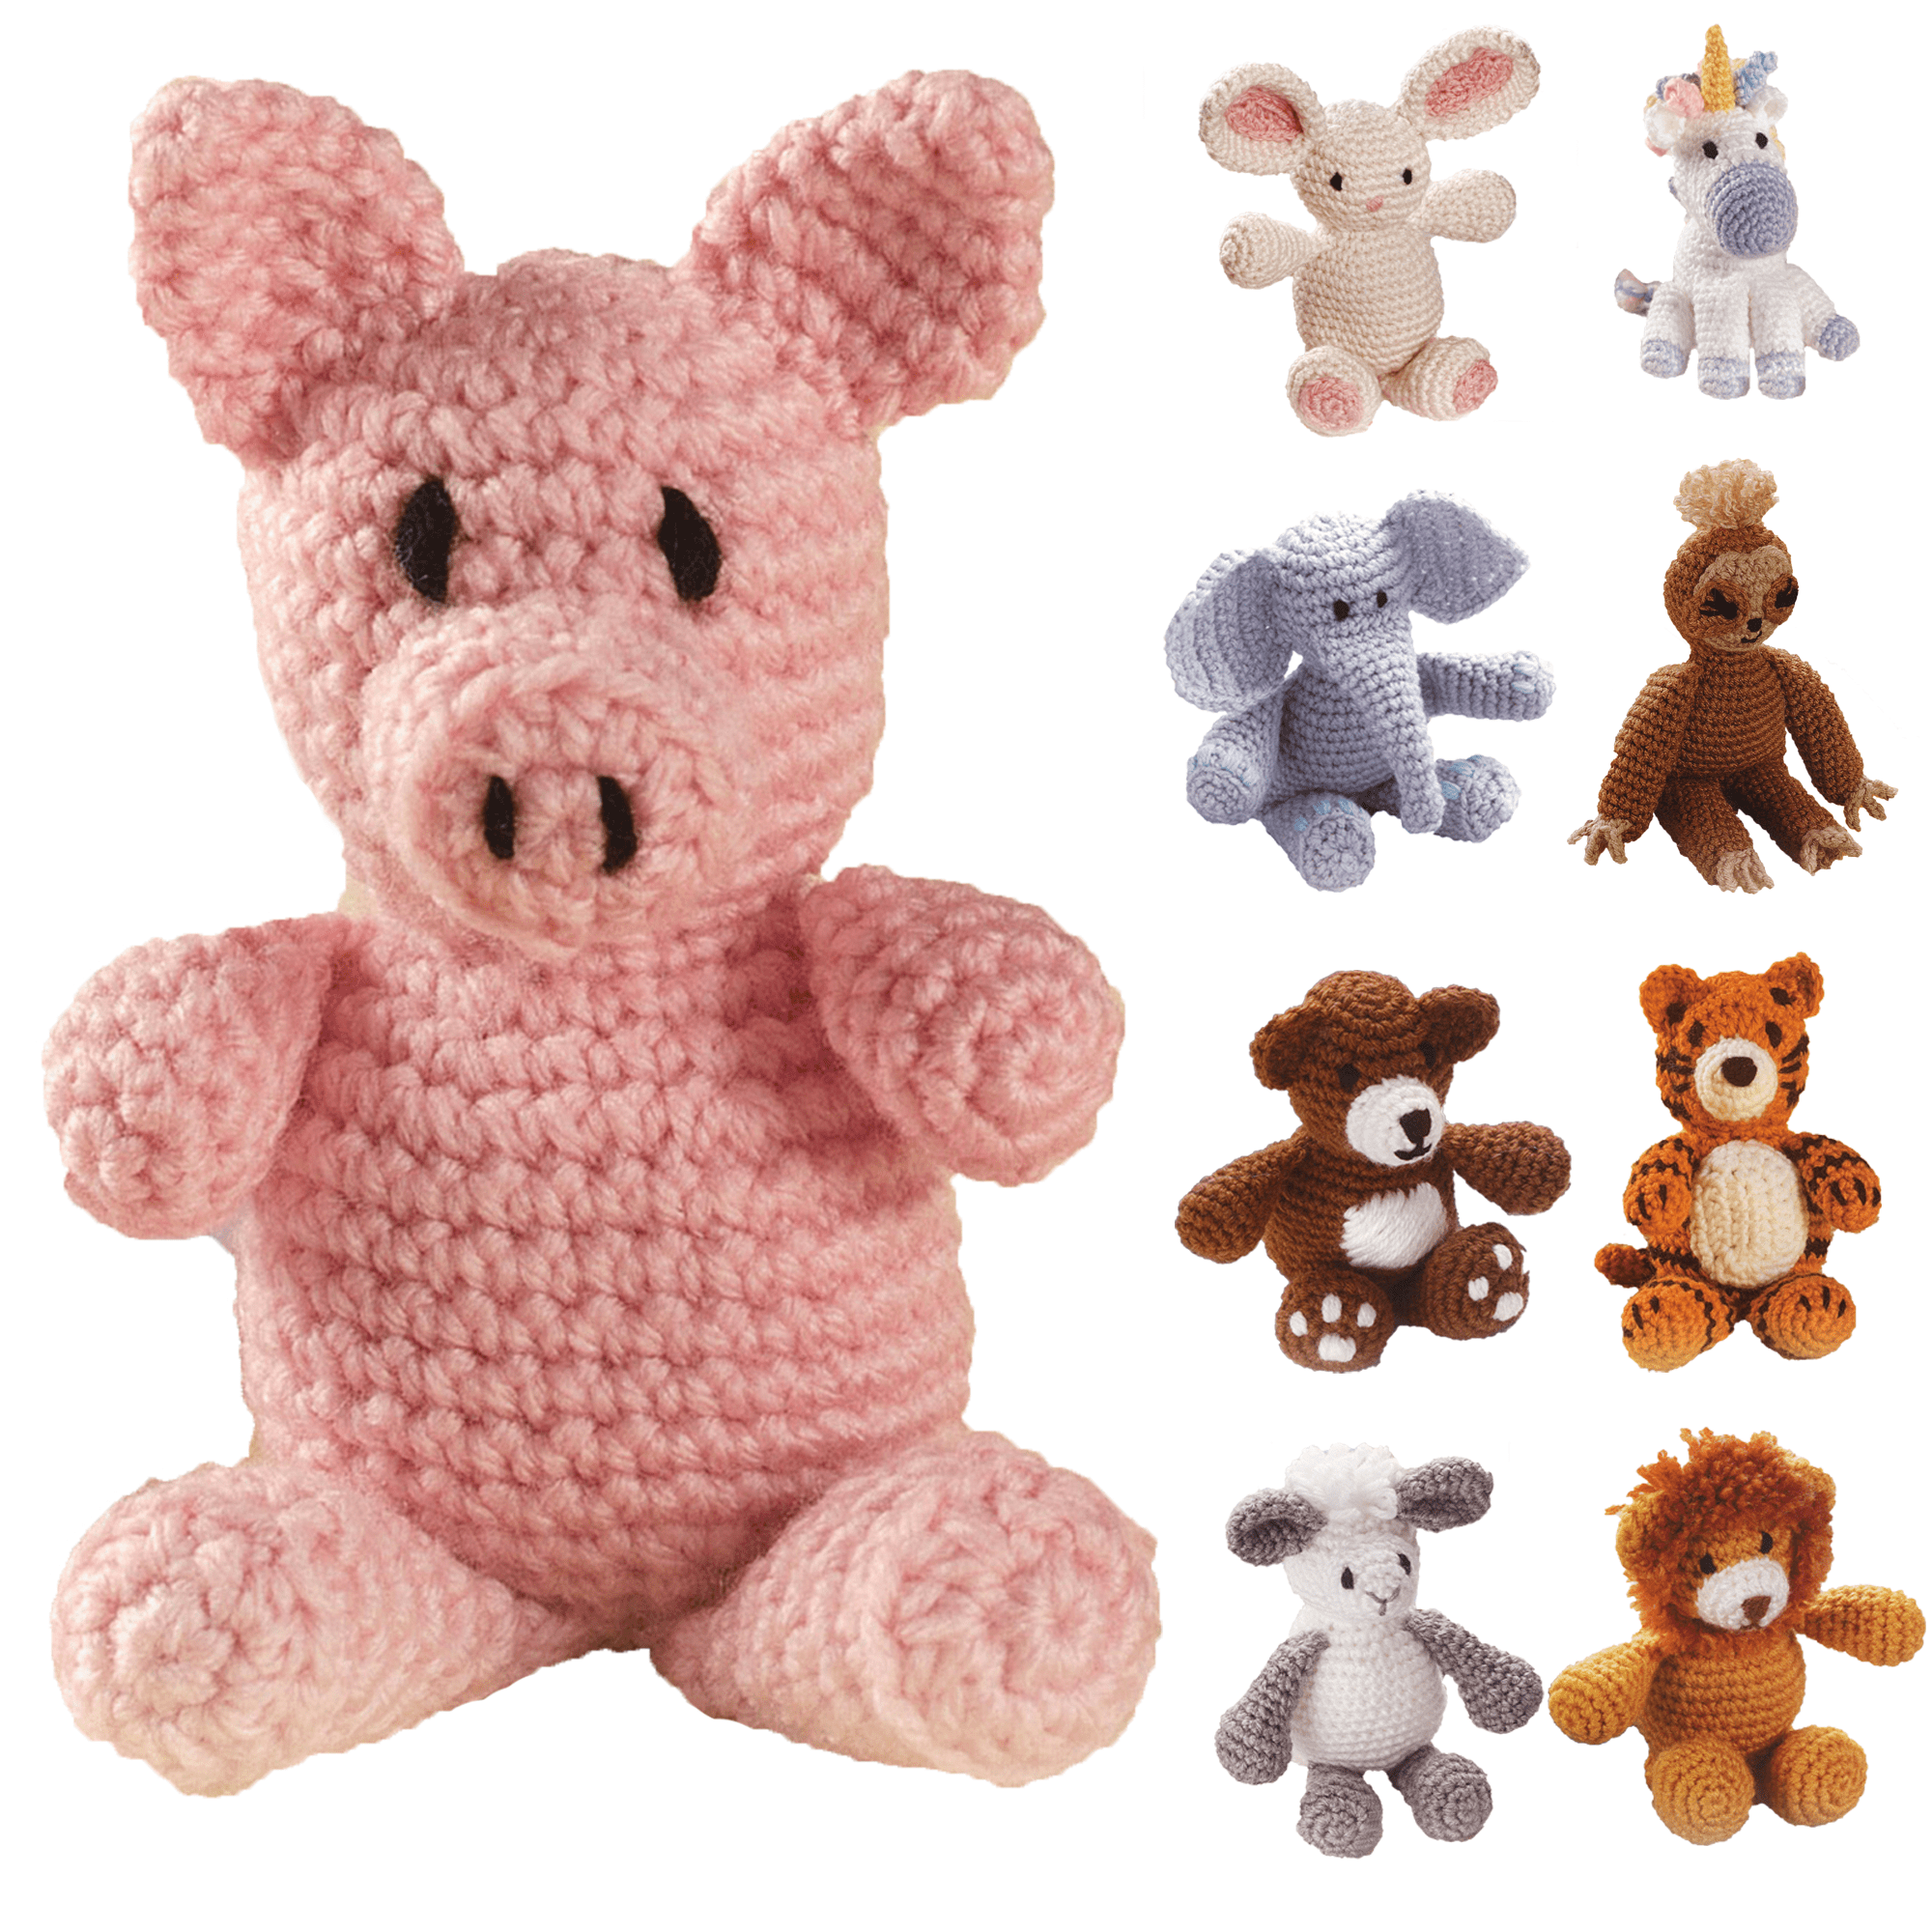 16 Adorable Crochet Animal Pillows For Kids